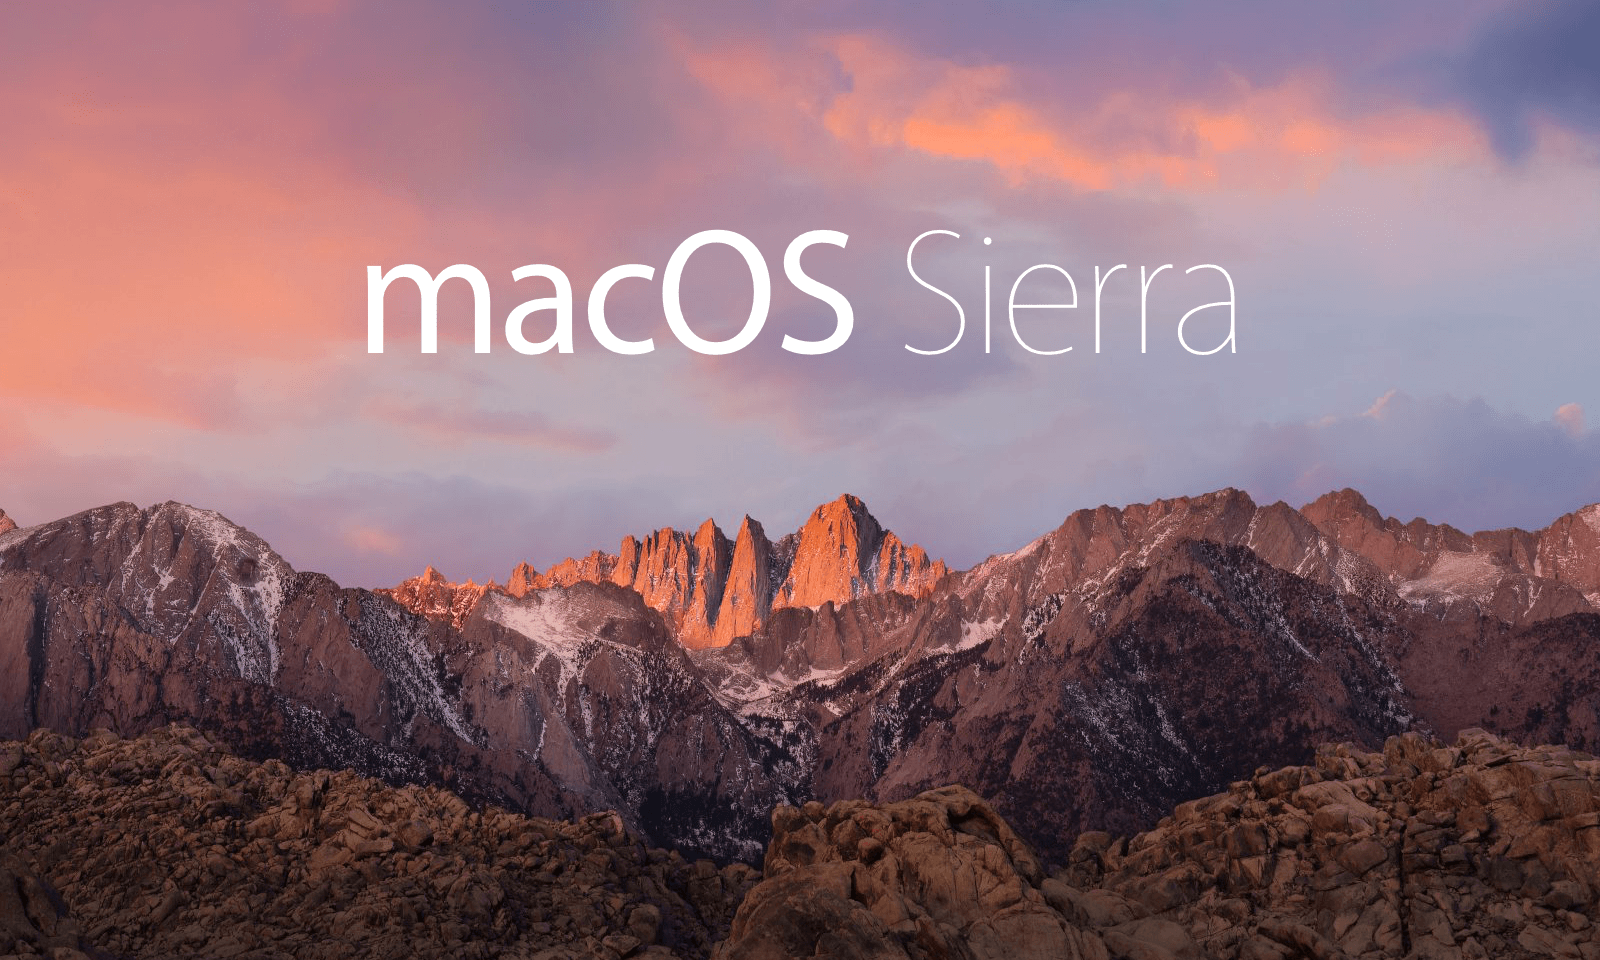 Fix Mac Freezes after Sleep in macOS Sierra